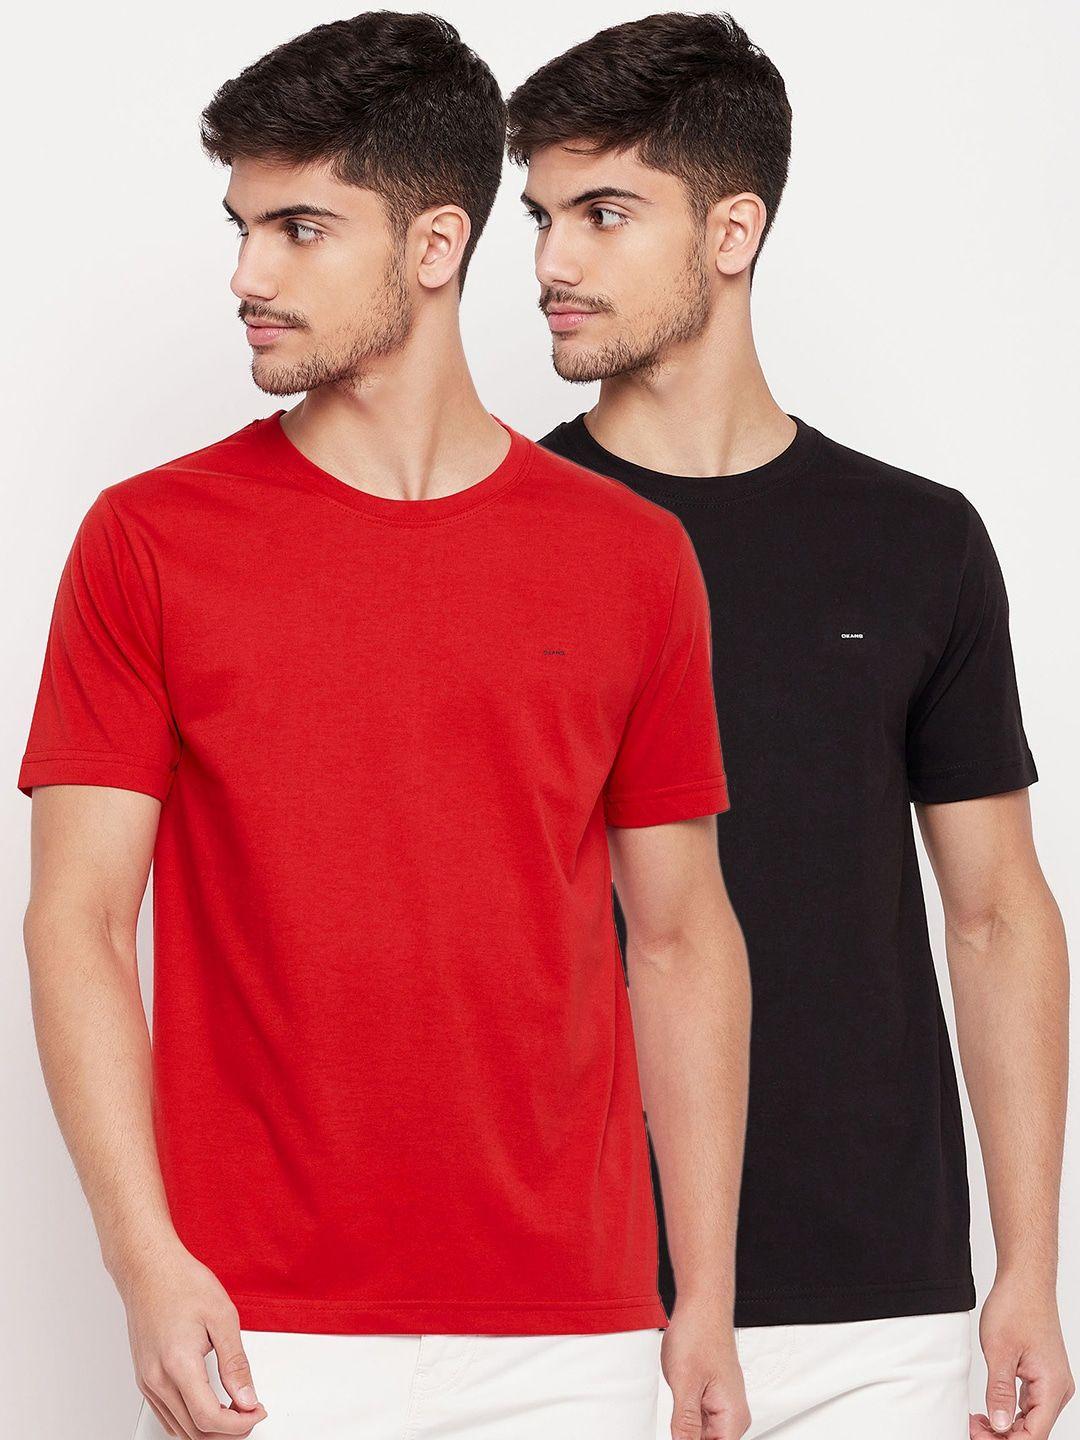 okane-men-red-2-v-neck-pockets-t-shirt